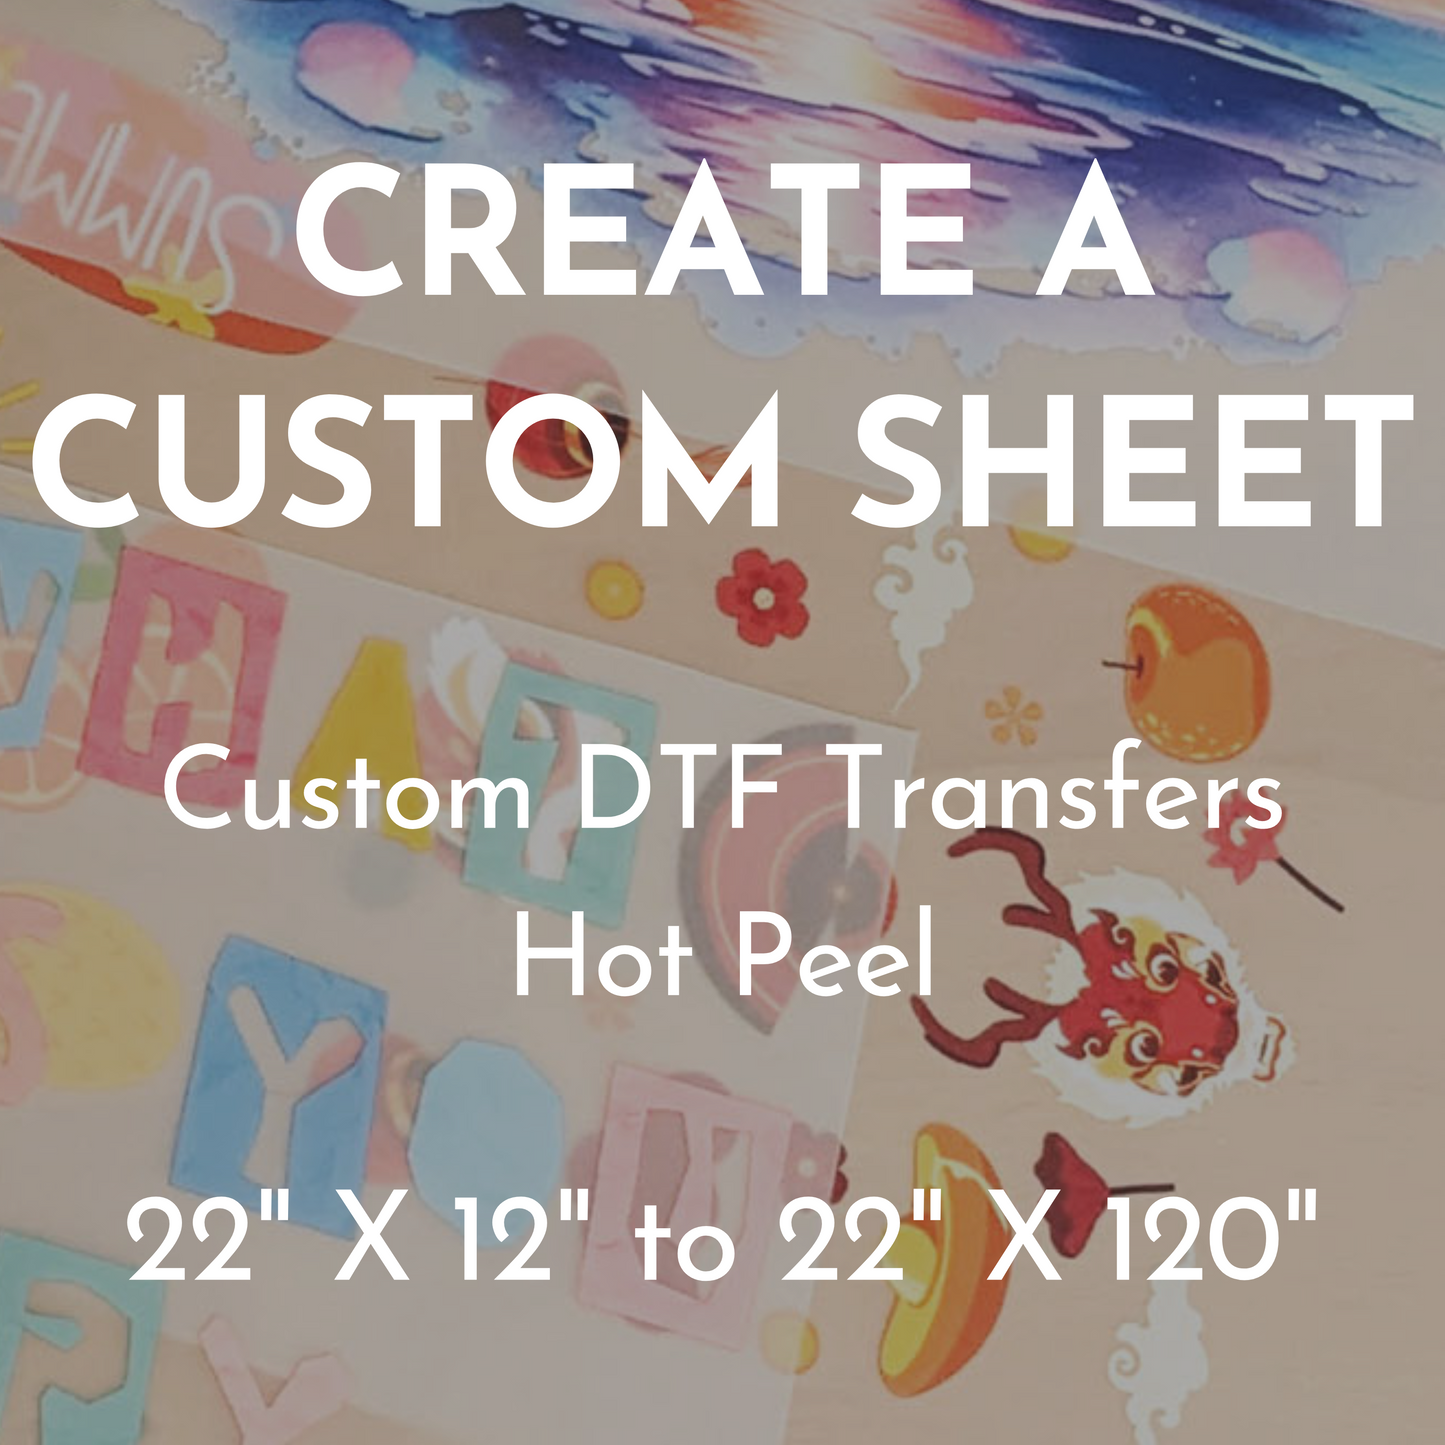 Build a Custom DTF Sheet